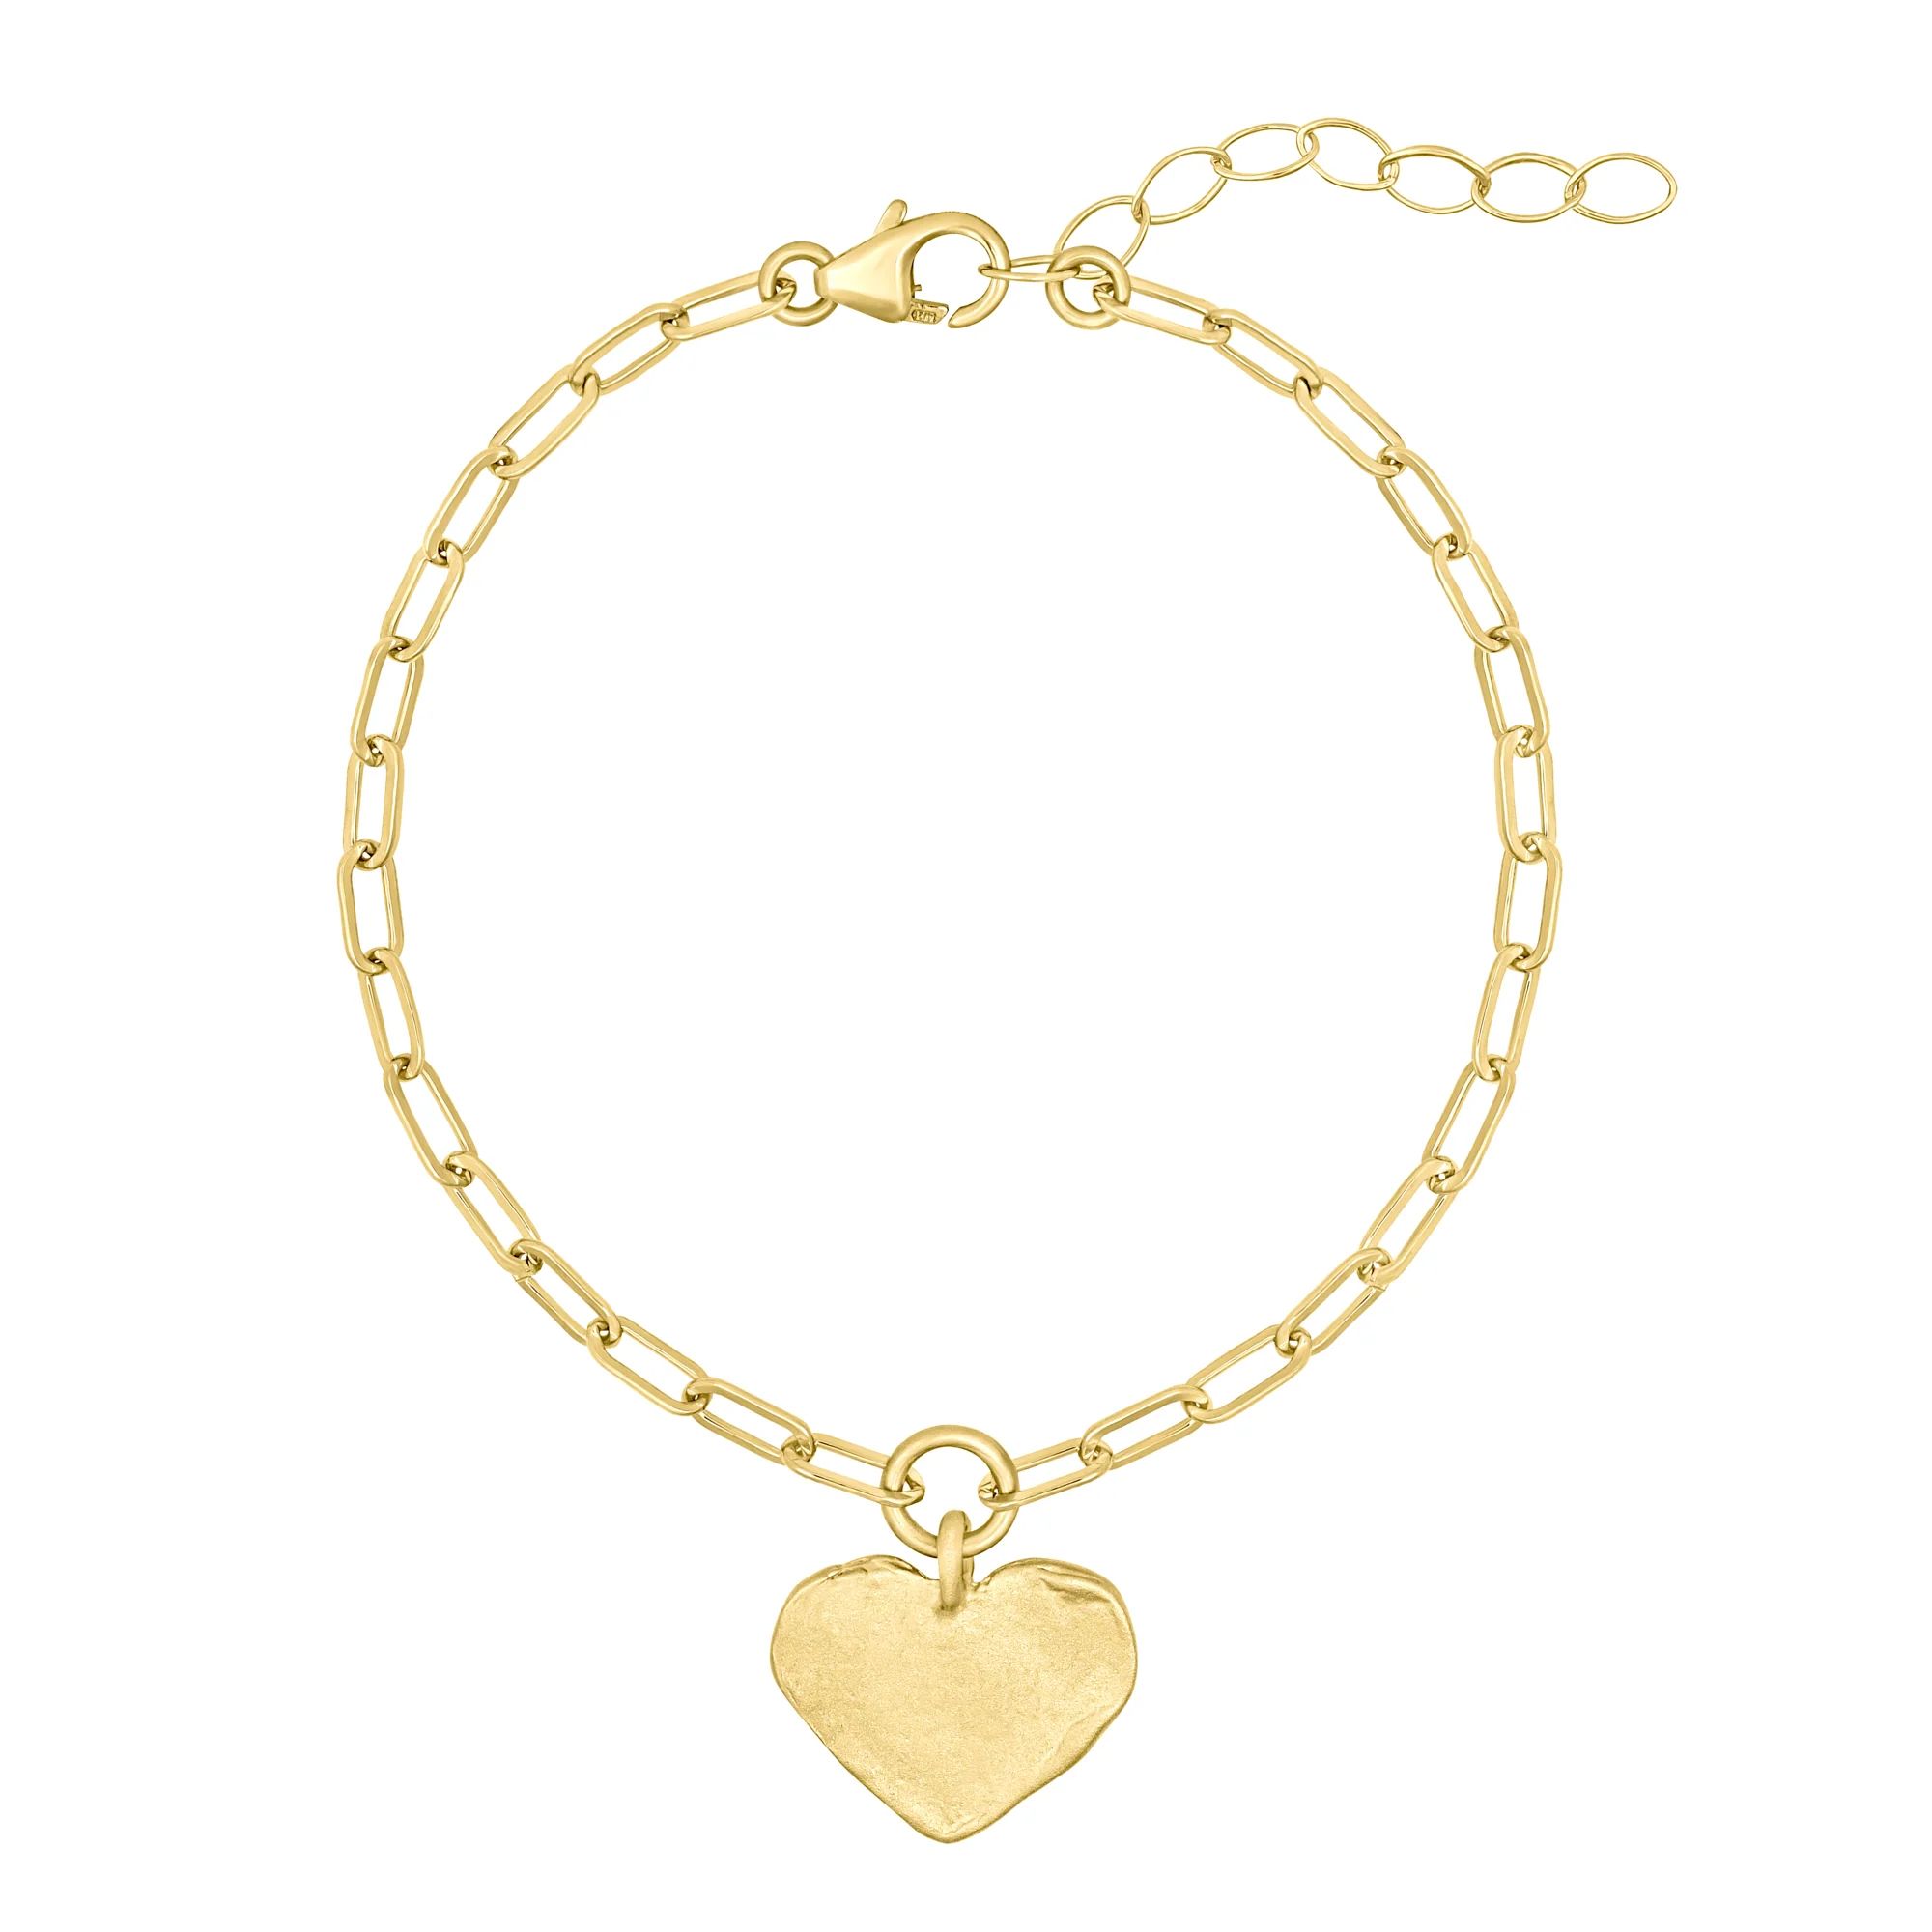 Bella's Bracelet | Electric Picks Jewelry